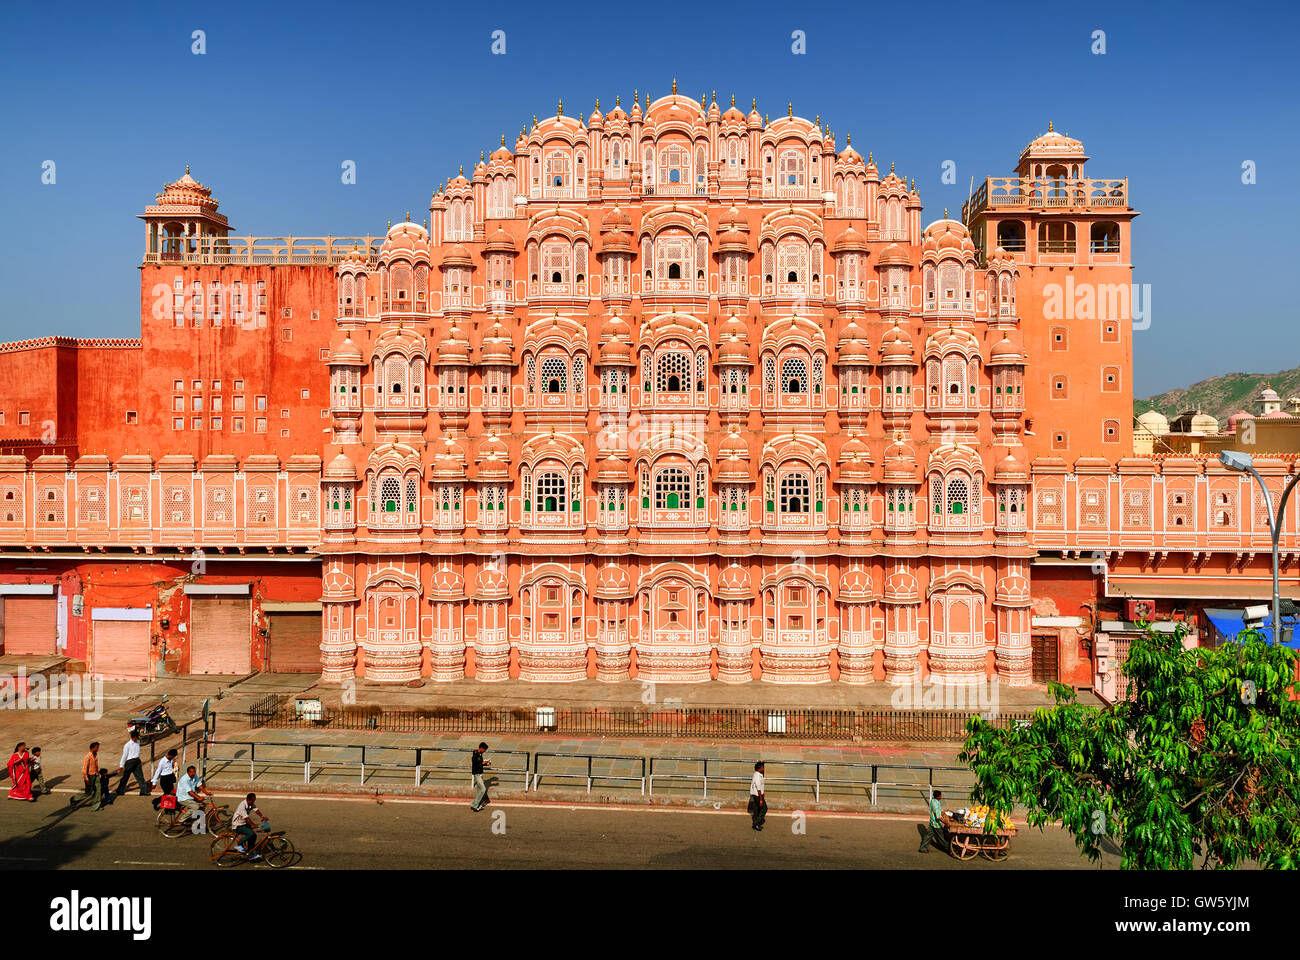 La facciata decorata del Maharaja del palazzo dei venti, Hawa Mahal, a Jaipur, India Foto Stock